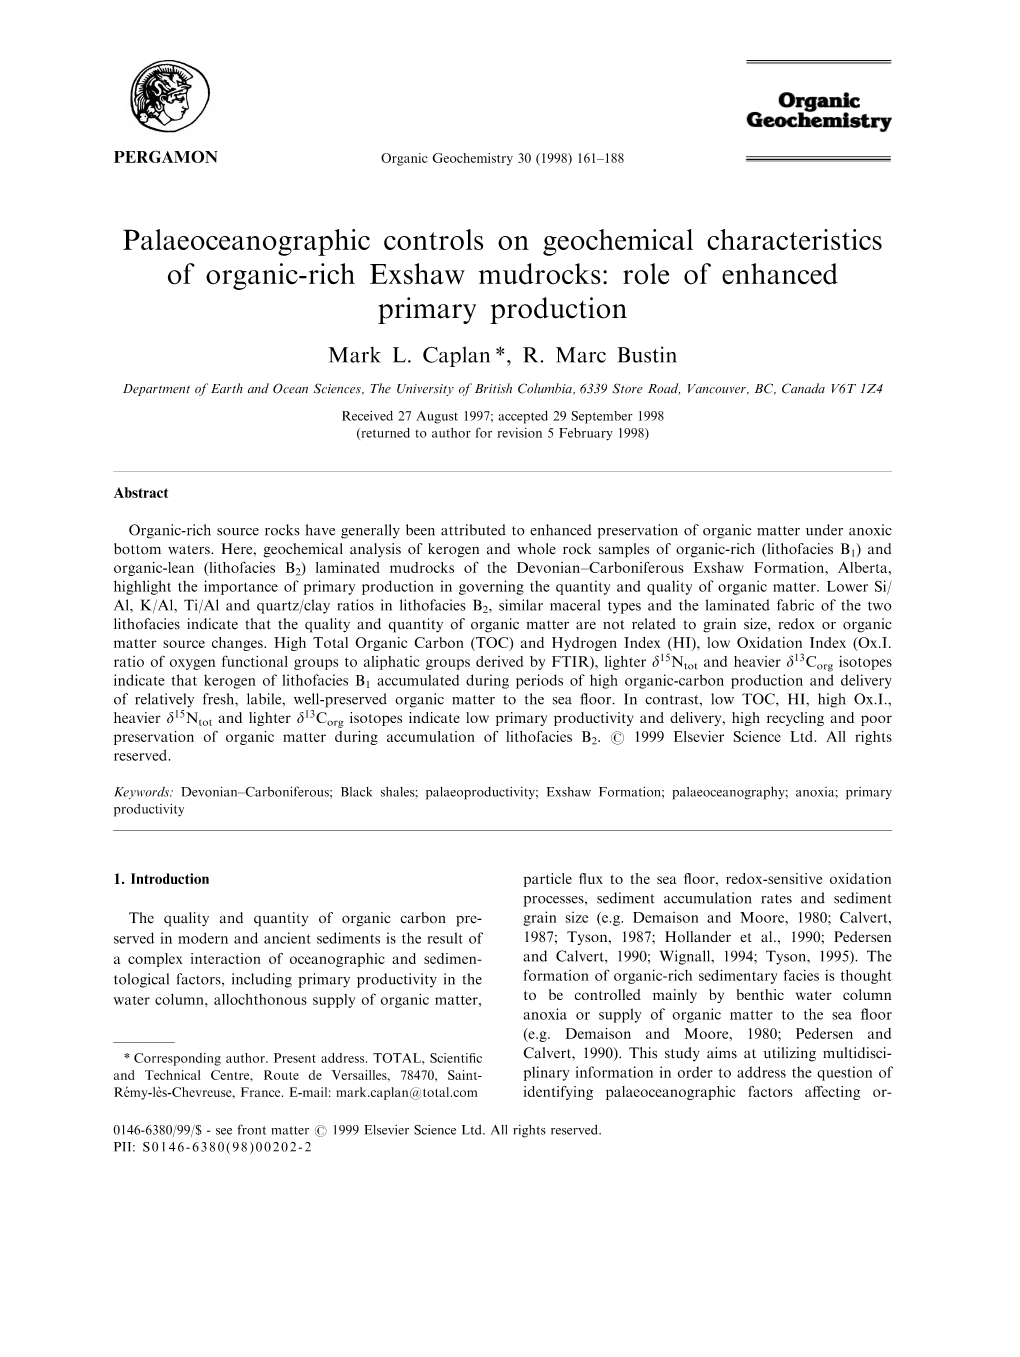 Palaeoceanographic Controls on Geochemical Characteristics of Organic-Rich Exshaw Mudrocks: Role of Enhanced Primary Production